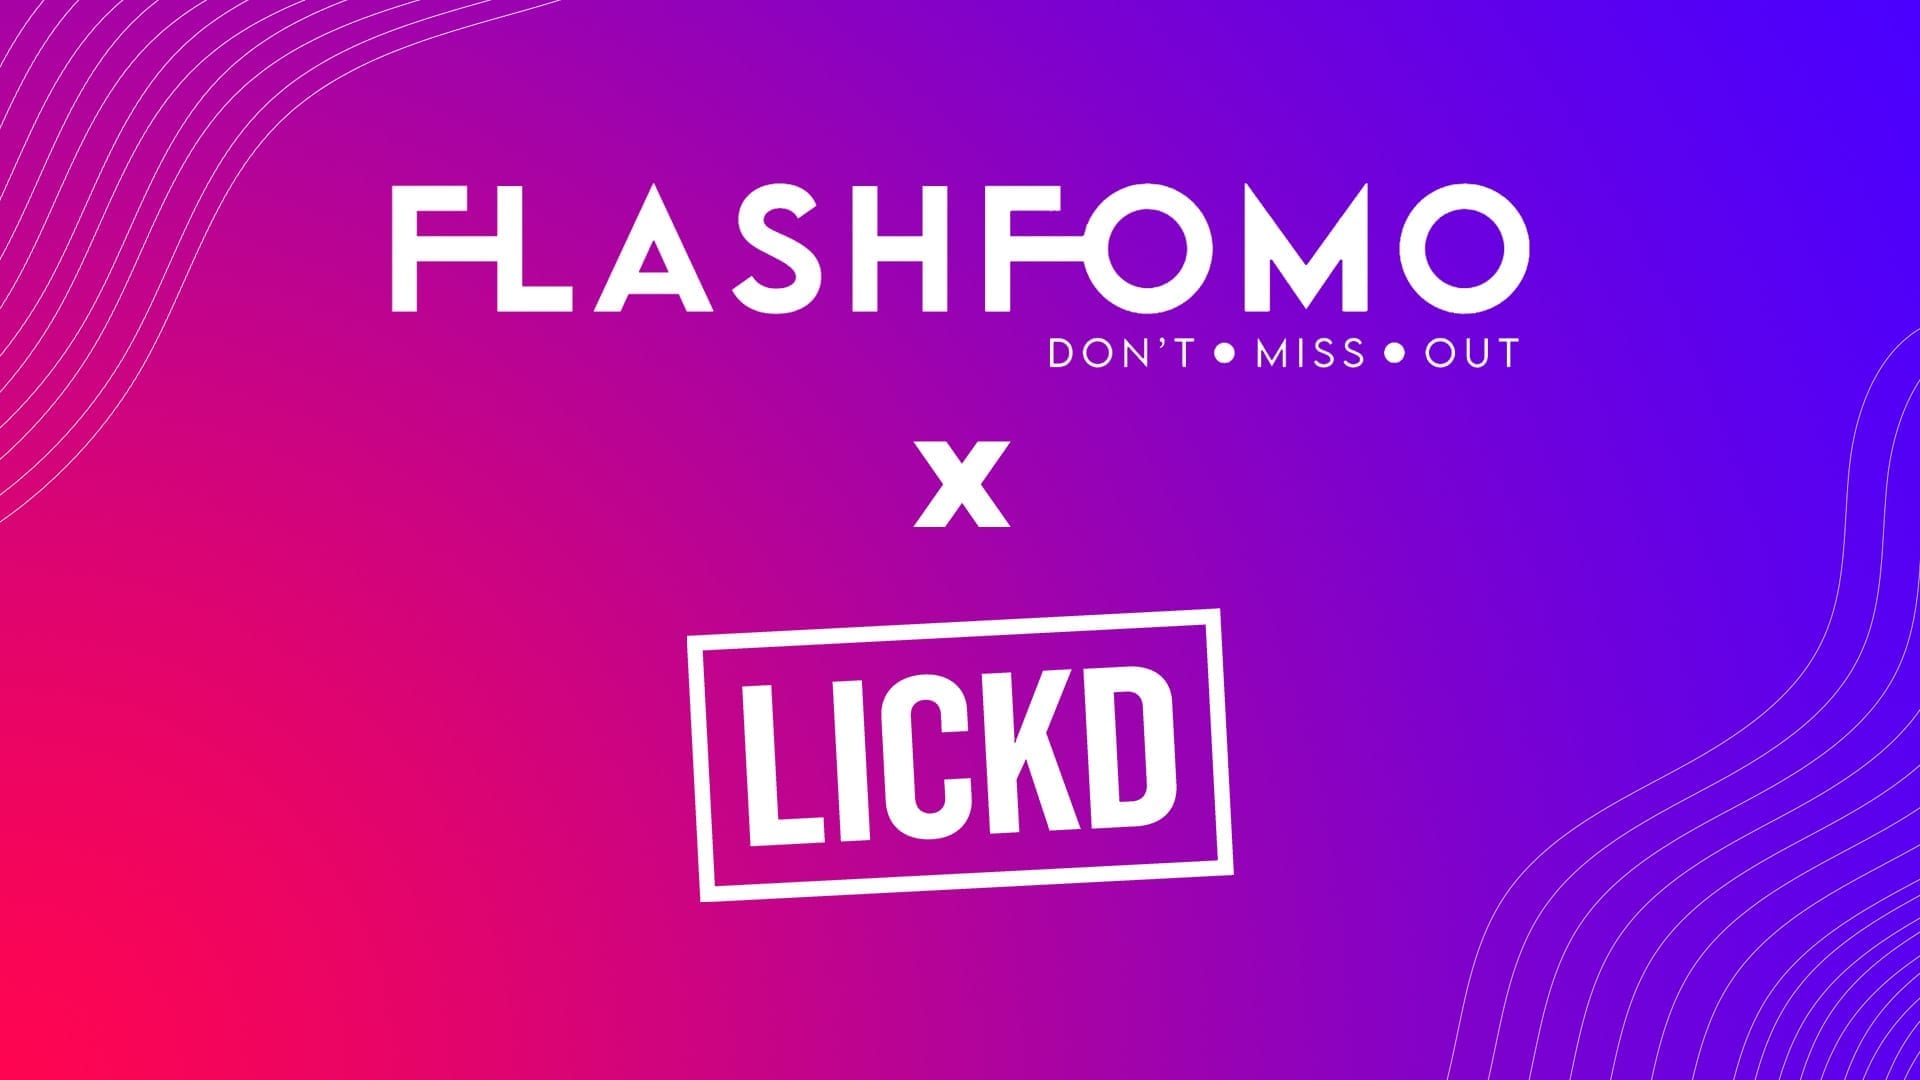 flashfomo x Lickd